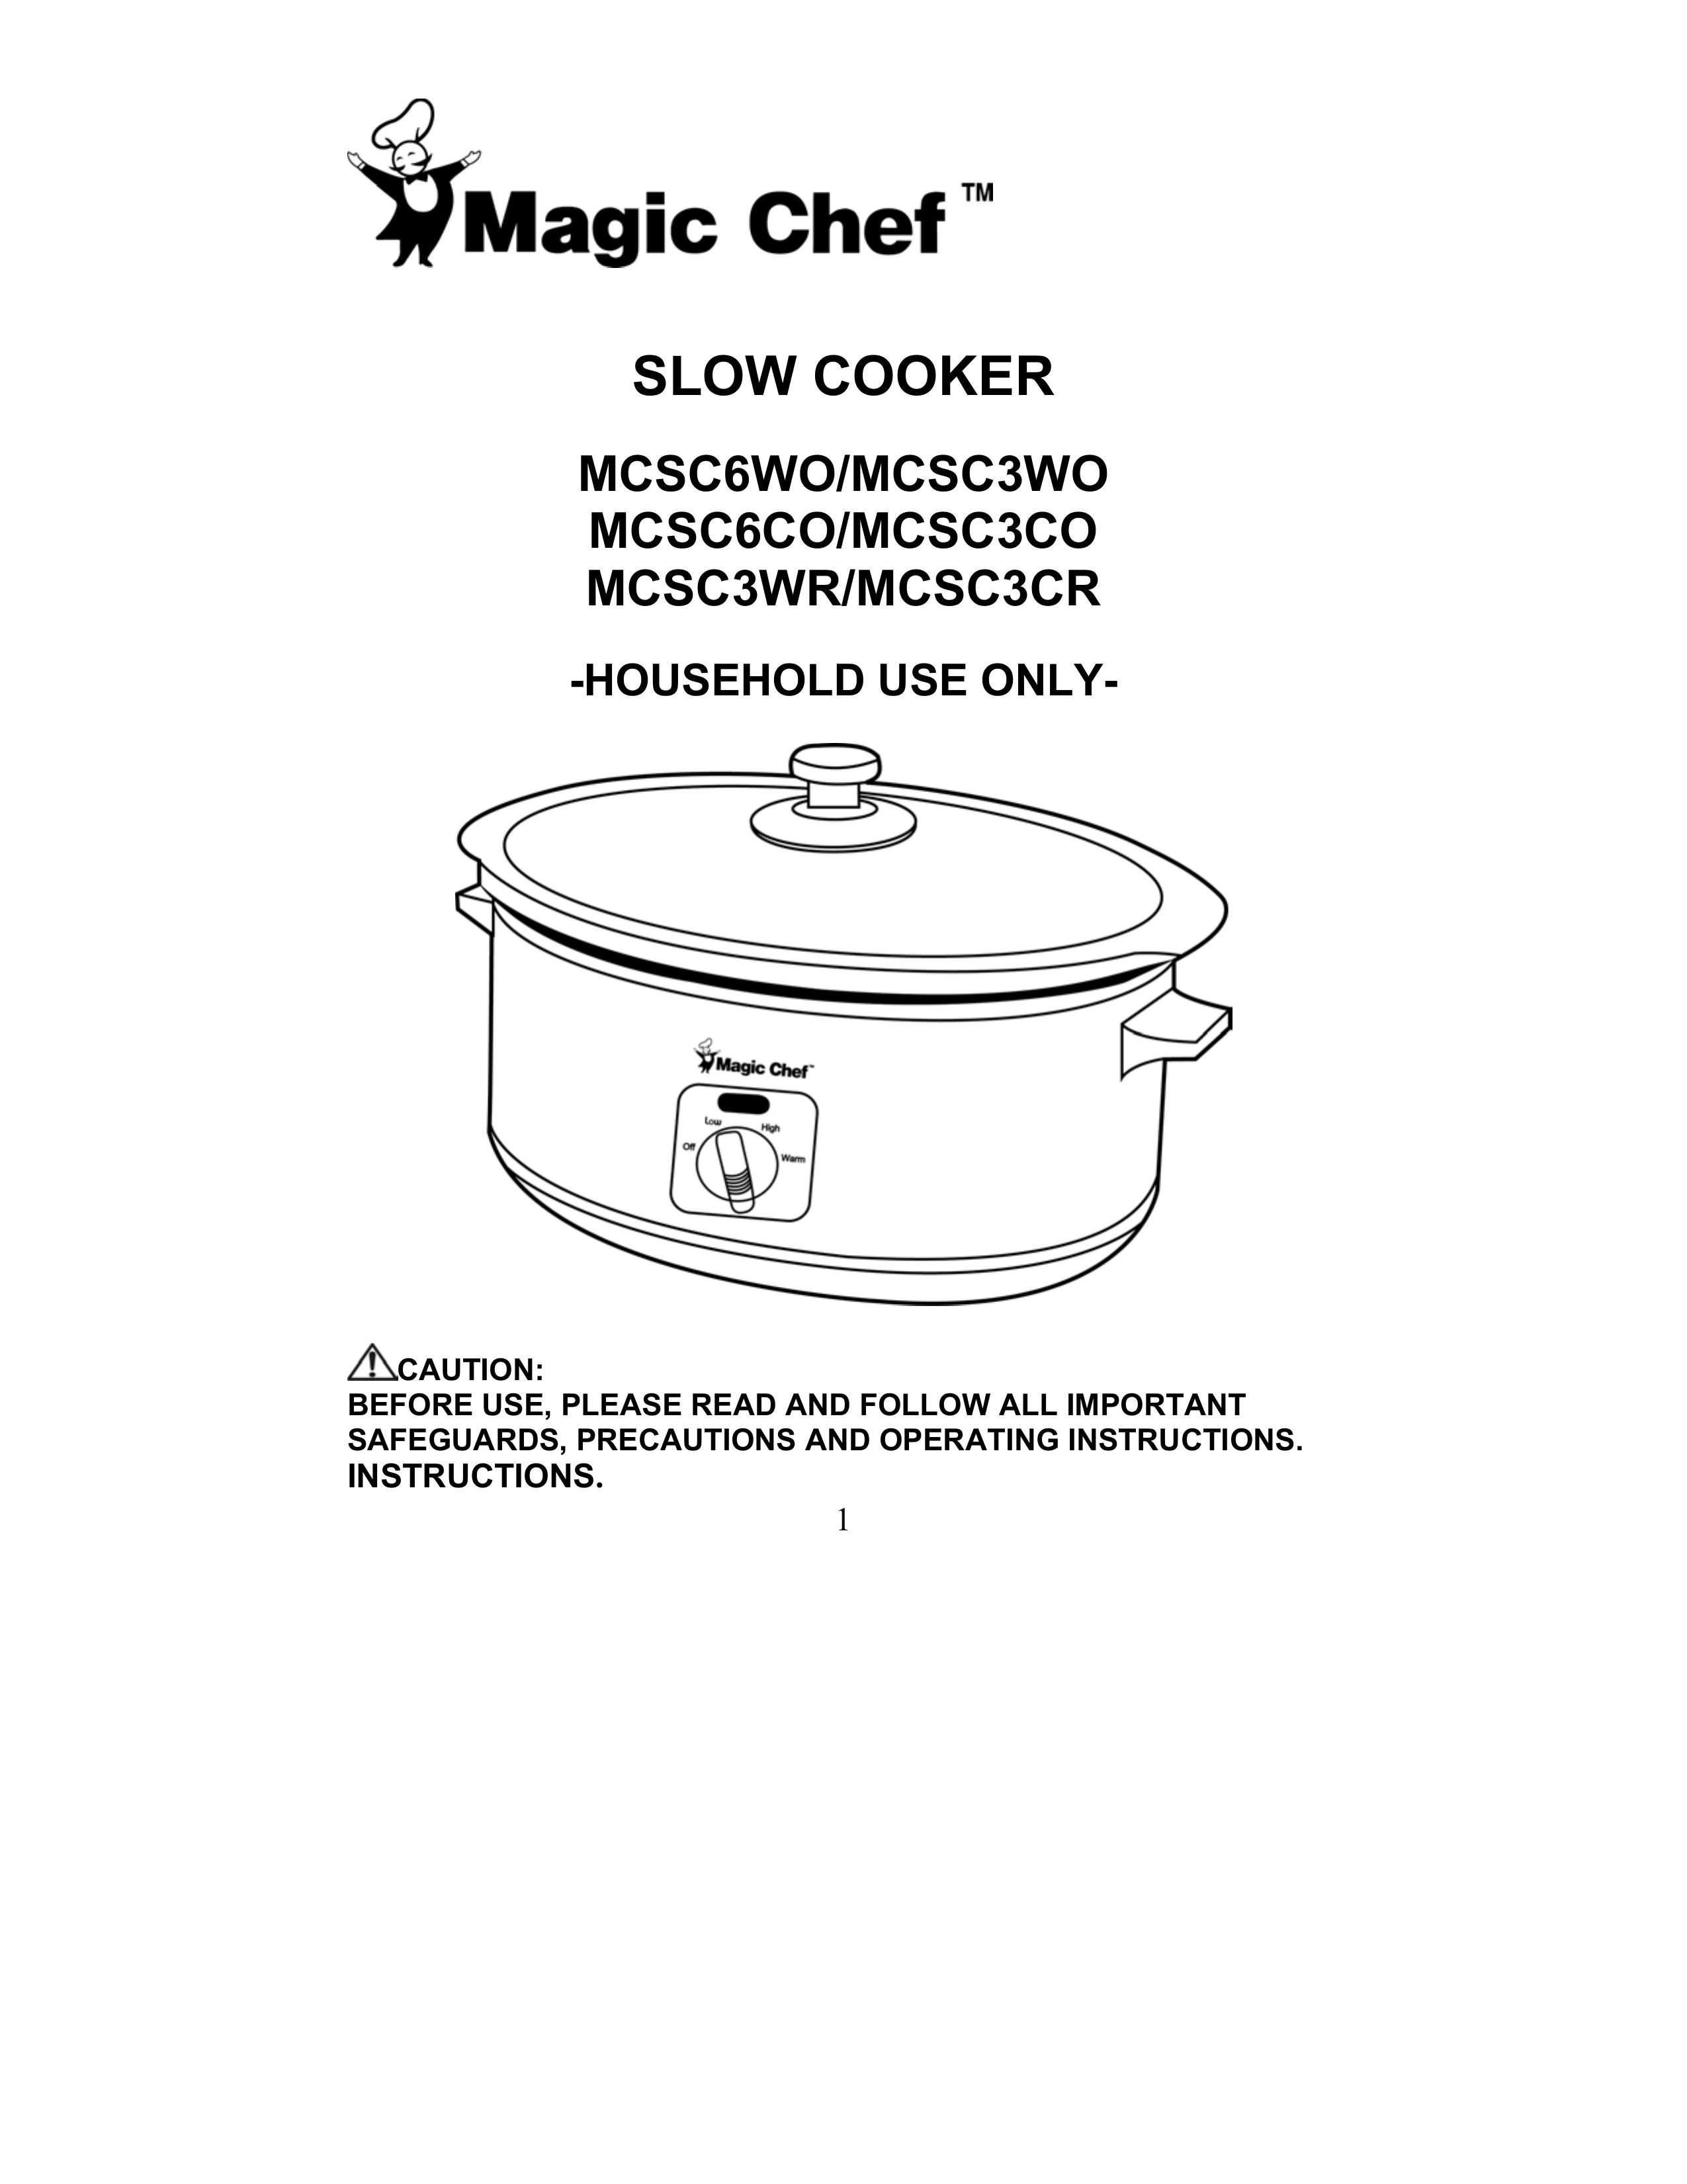 Magic Chef MCSC3WRs Slow Cooker User Manual